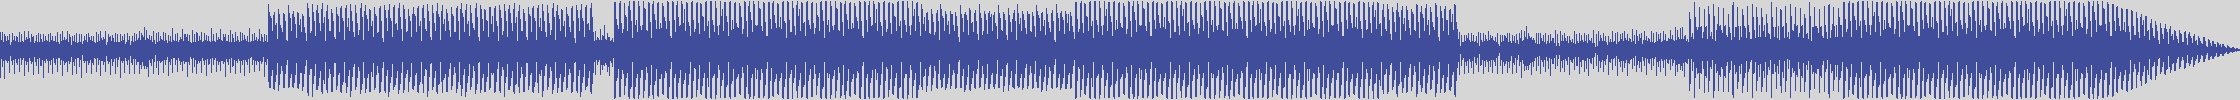 nf_boyz_records [NFY056] Zac Brothers - Stamp [Tribal Mix] audio wave form